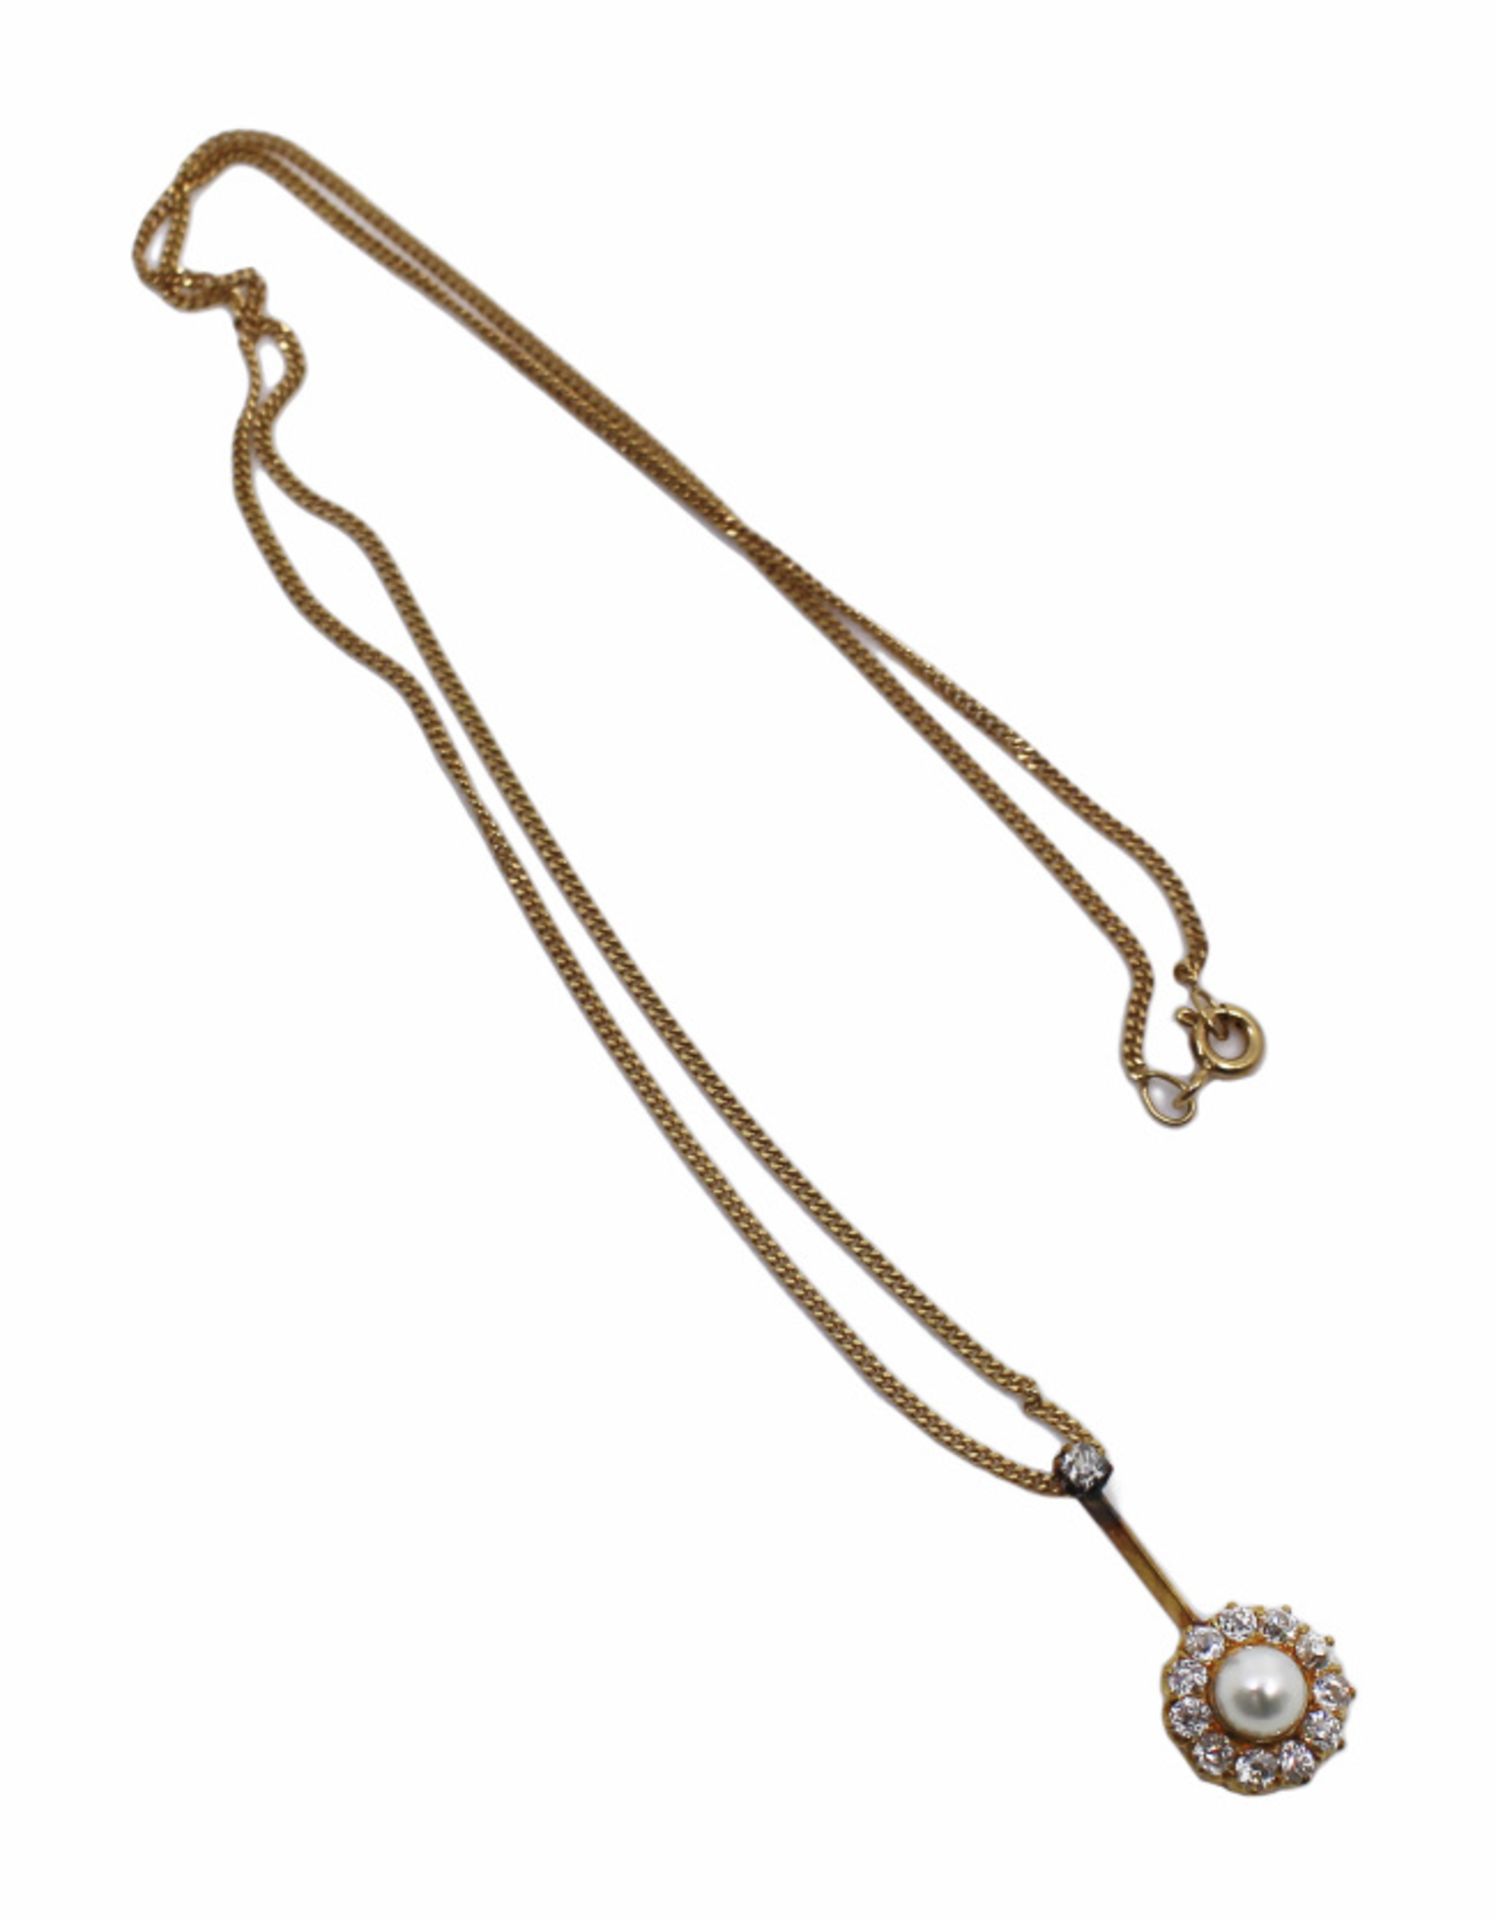 Antique Pearl & Diamond Gold Pendant c.1910 - Image 2 of 6